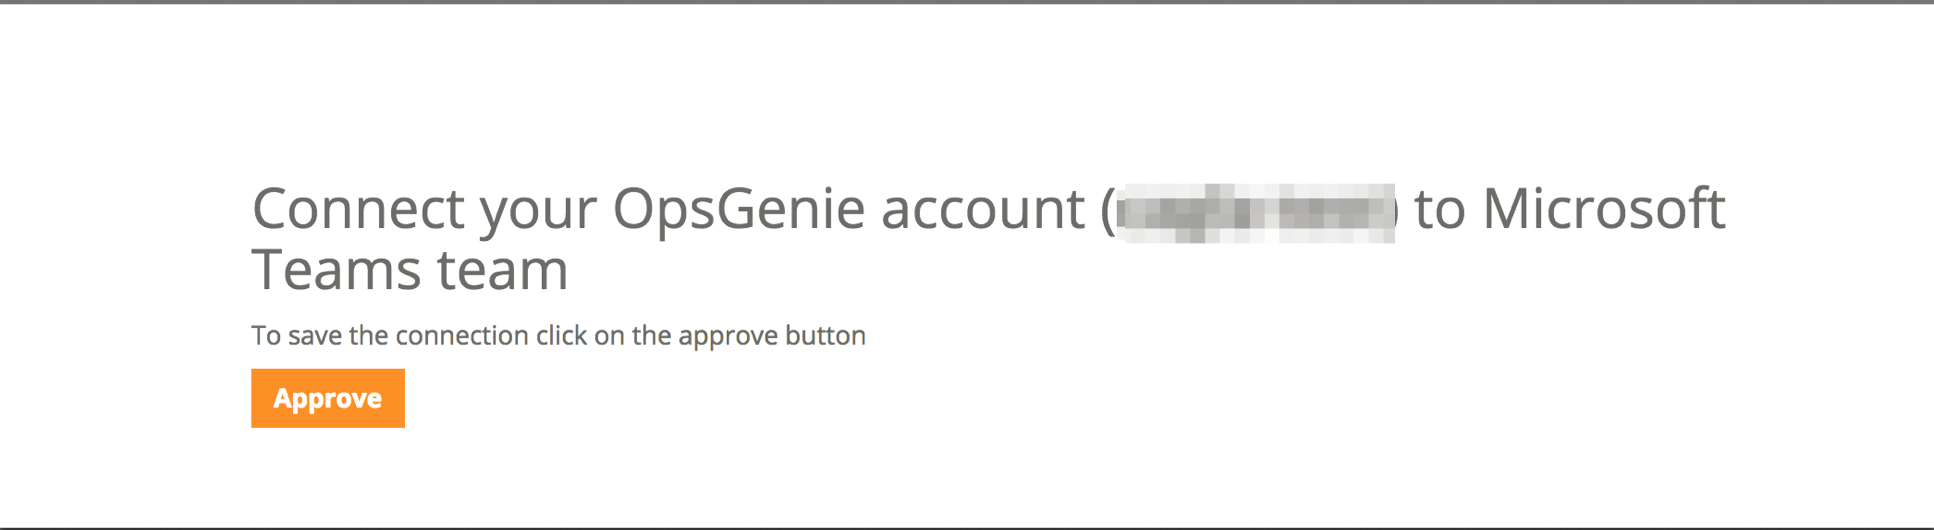 Microsoft Teams Genie connect